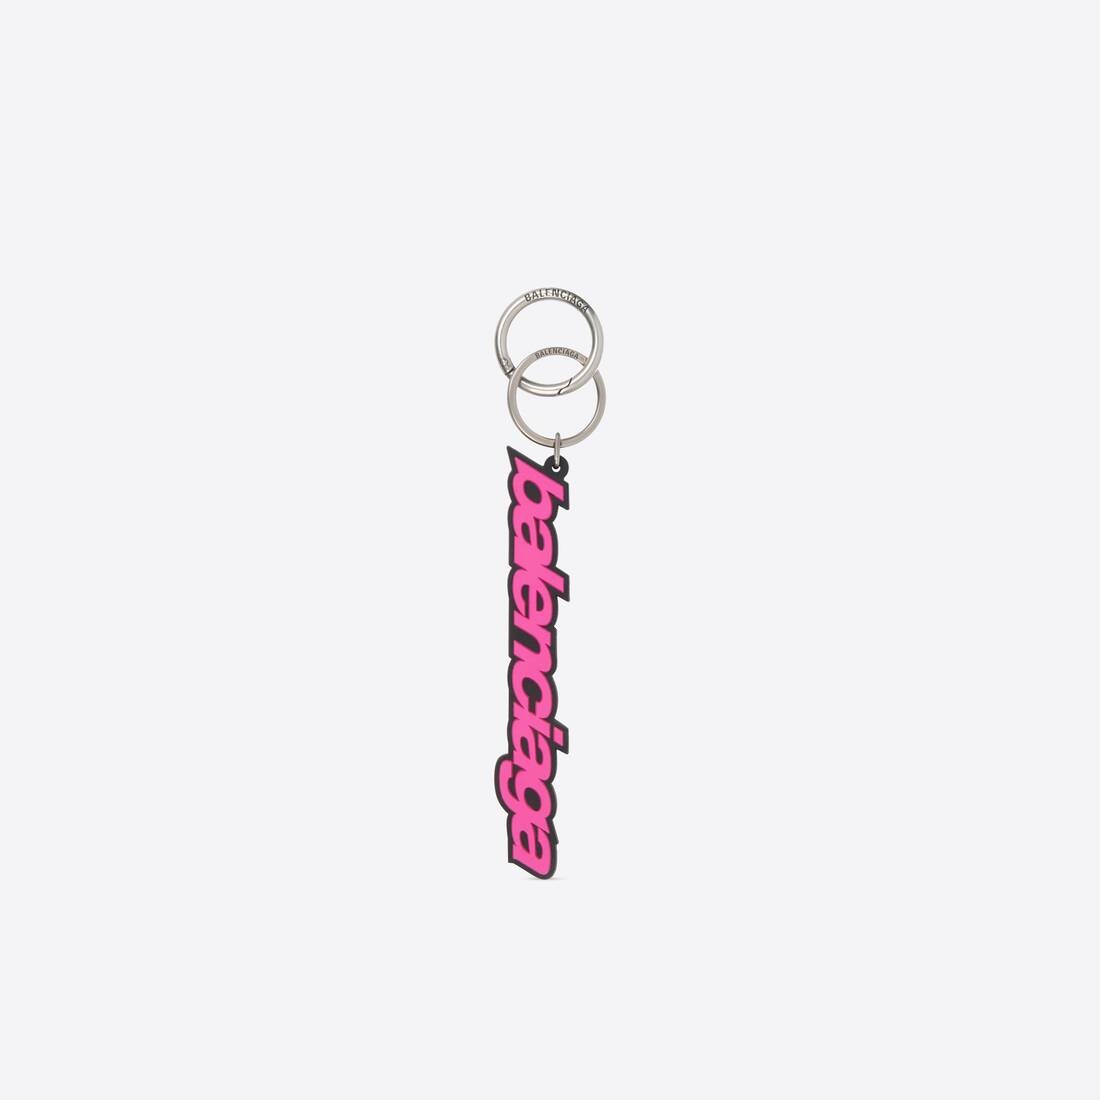 Balenciaga Keychain in Black/l Fluo Pink - 1